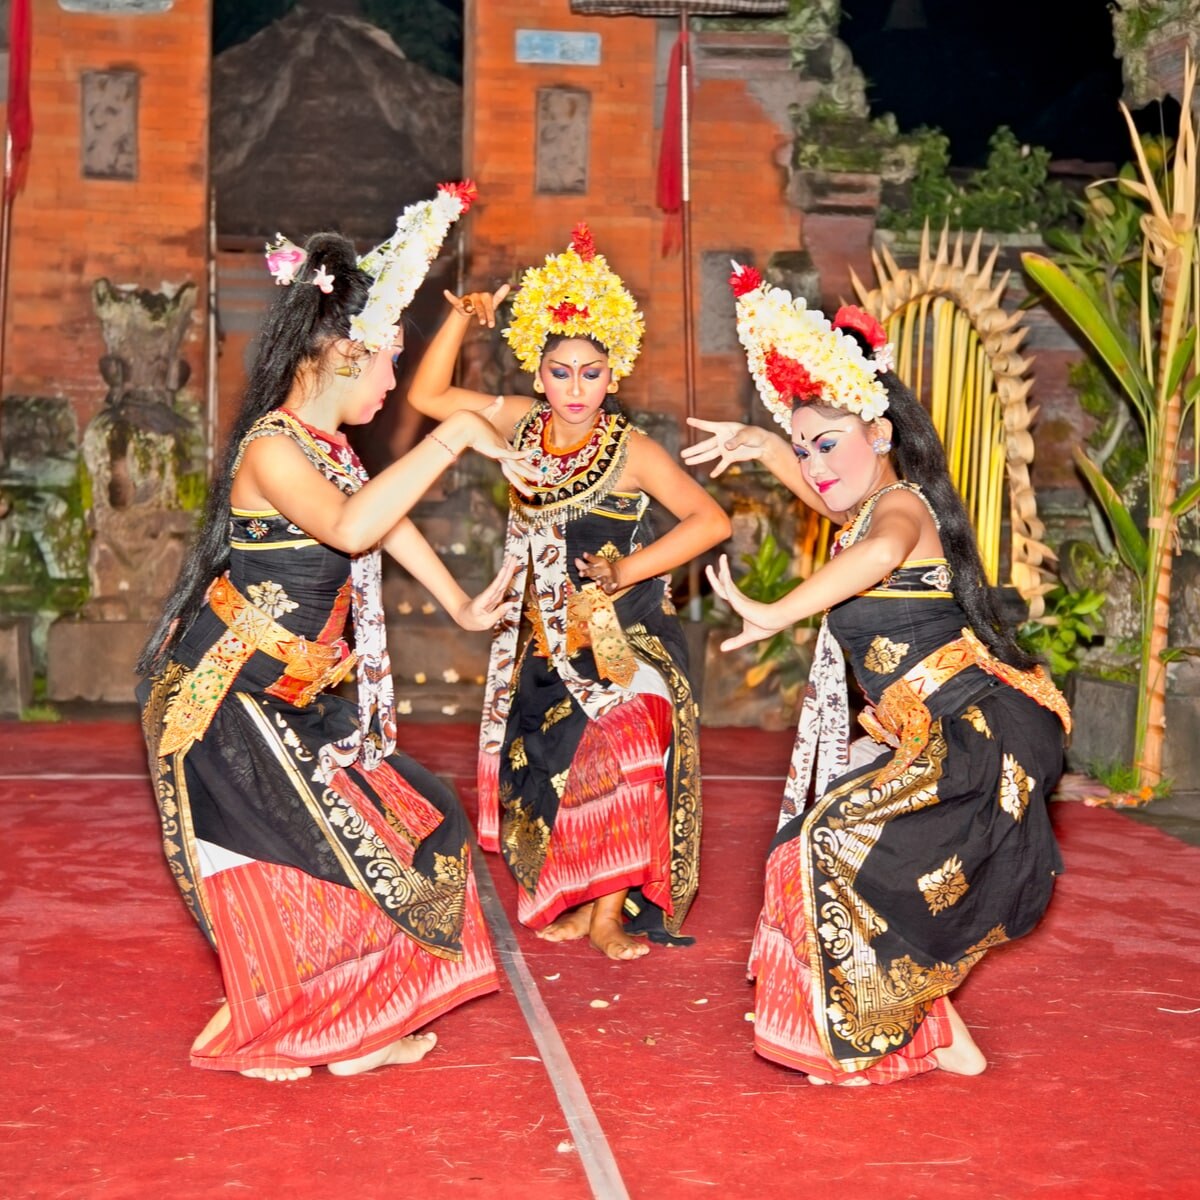 Discover Janger Dance: Bali's Joyful 1930s Dance Tradition